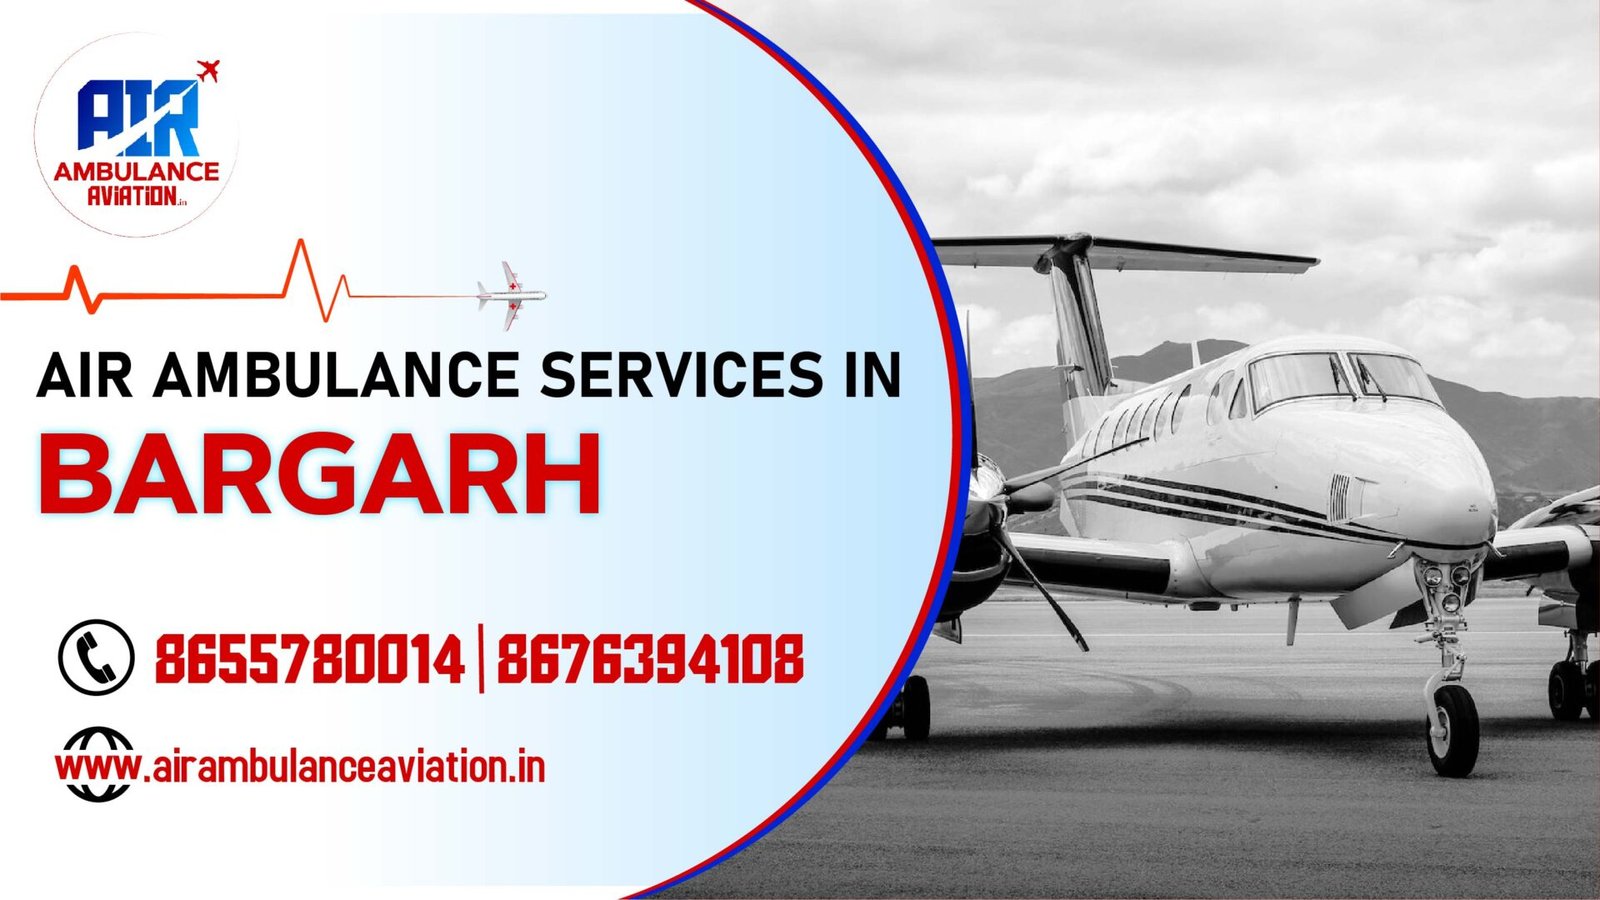 Air ambulance services in Bargarh